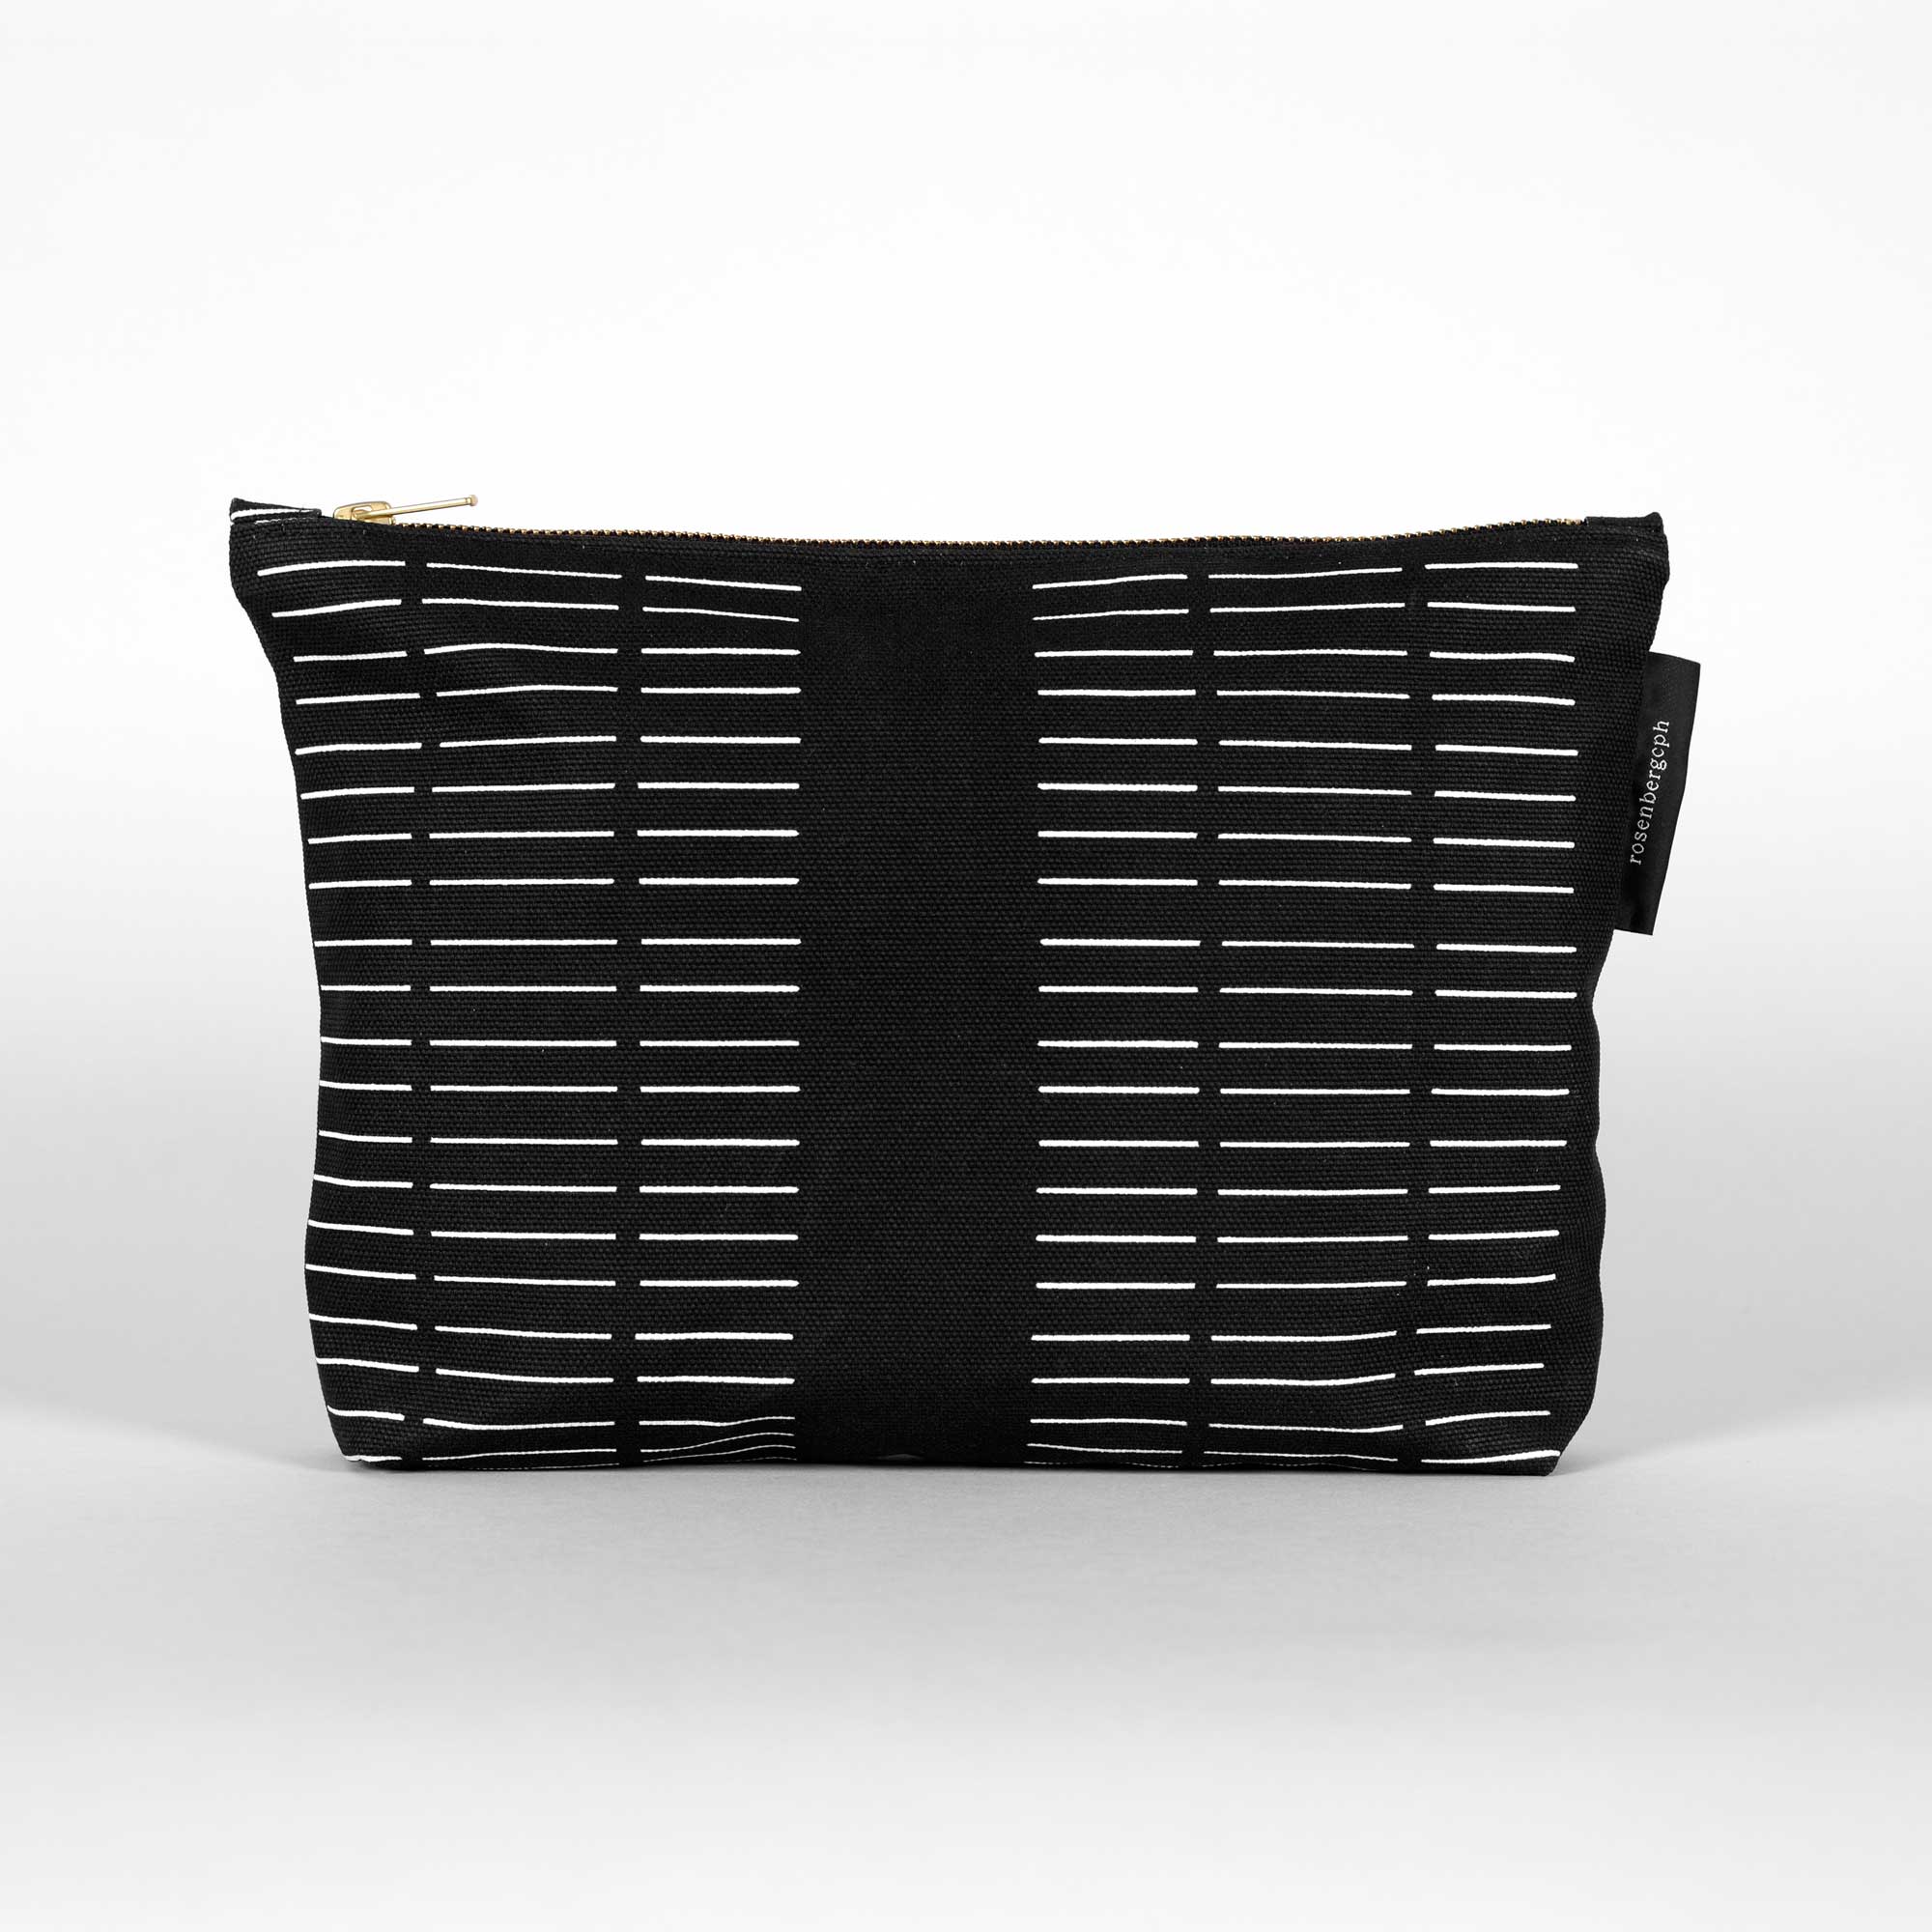 Ctrl purse, Dash black. Design by Anne Rosenberg, RosenbergCph